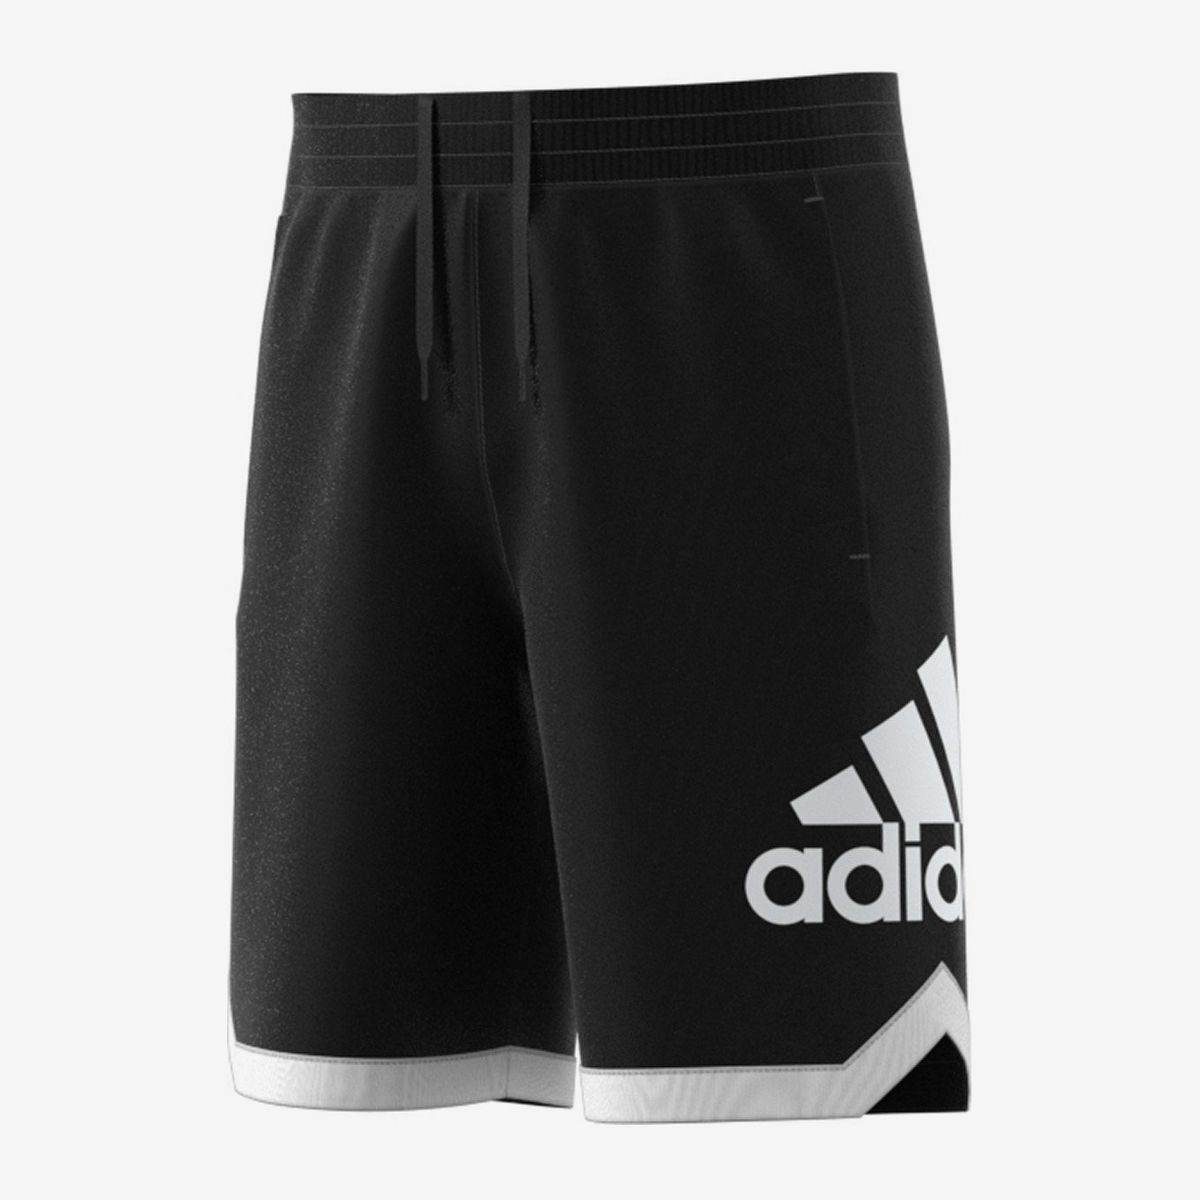 adidas gym shorts with pockets